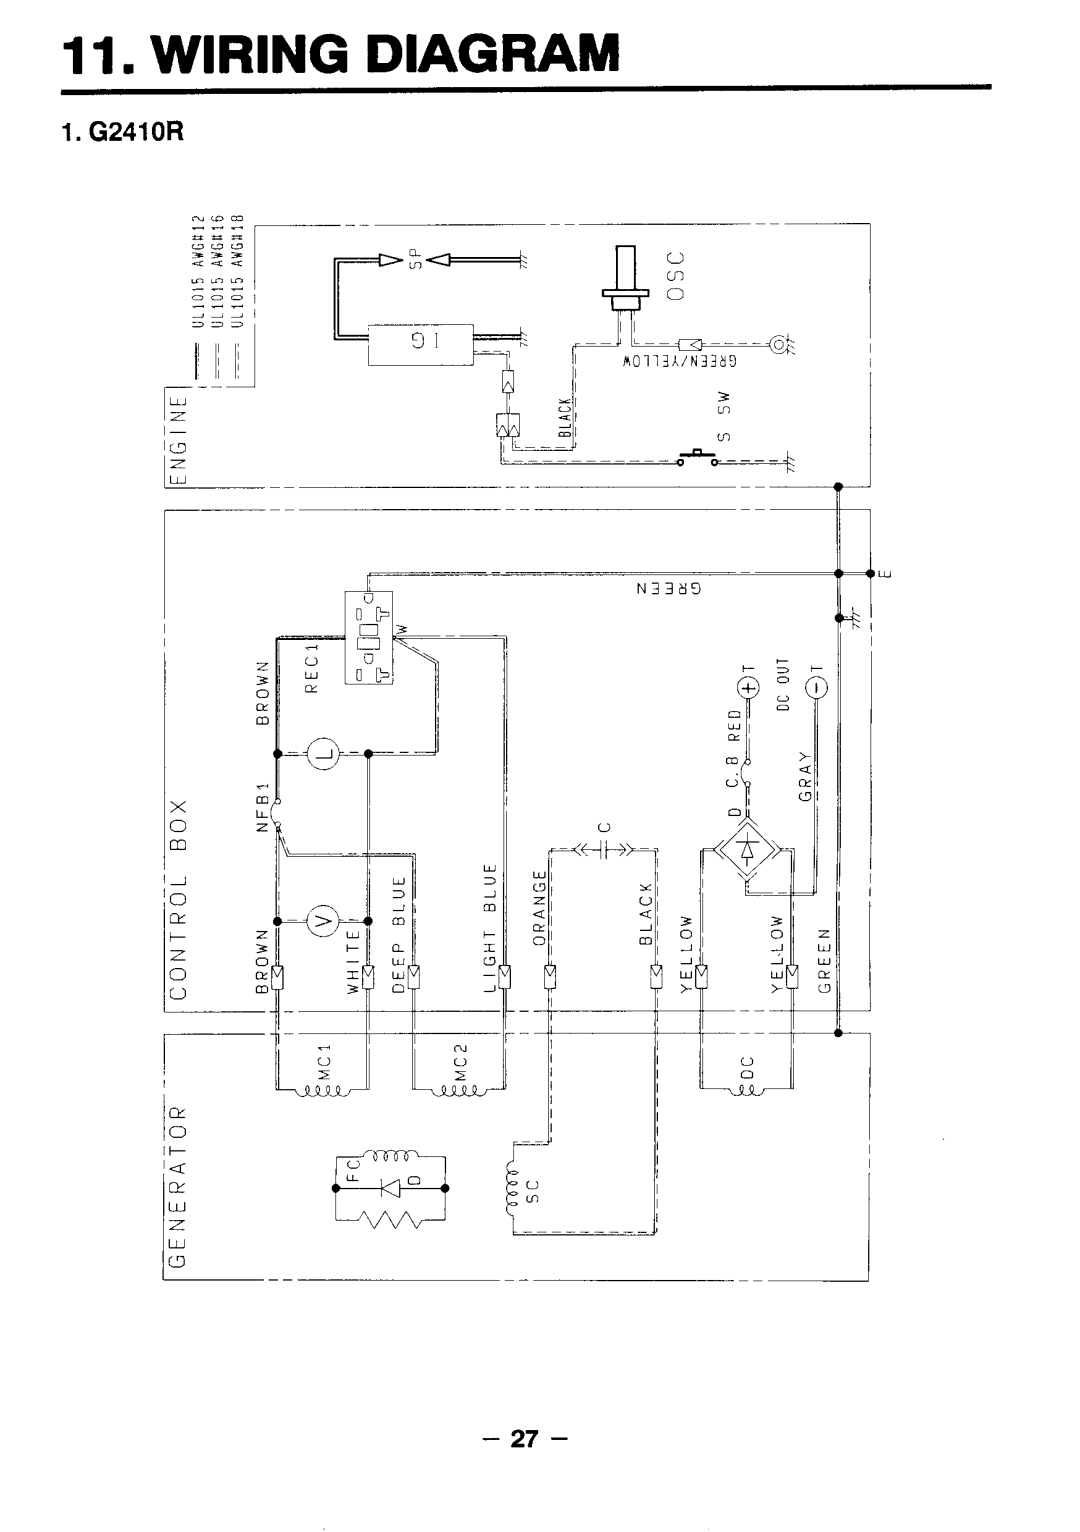 Makita G571O R, G5711R, G351O R, G341O R, G3511R manual Wiring Diagram, 1.G2410R 